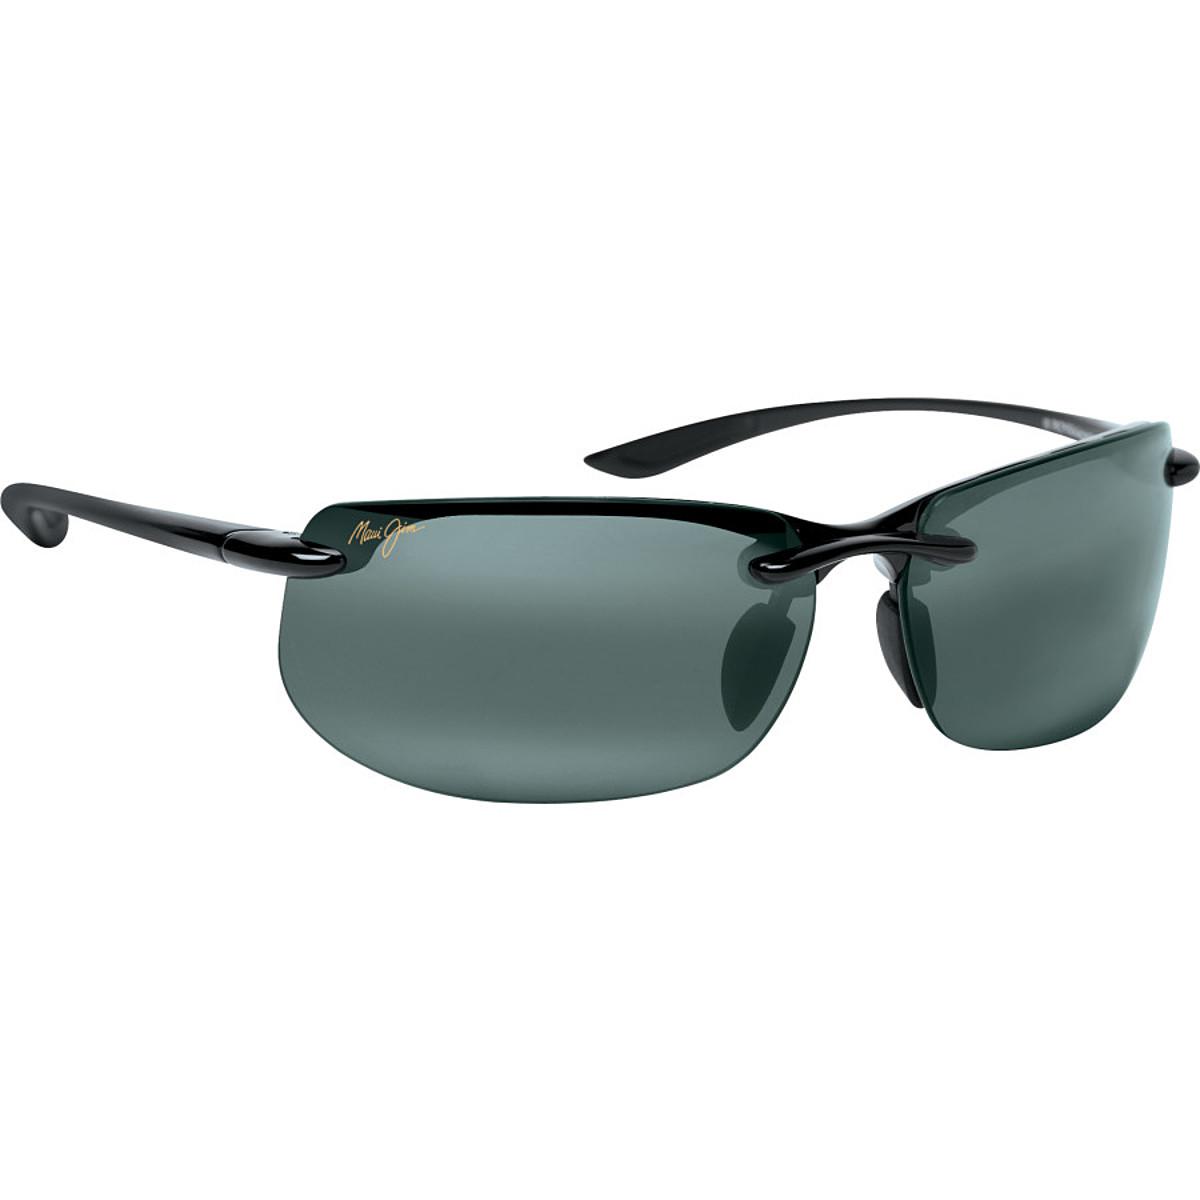 Maui Jim Banyans Sunglasses - Polarized in Gray for Men - Lyst